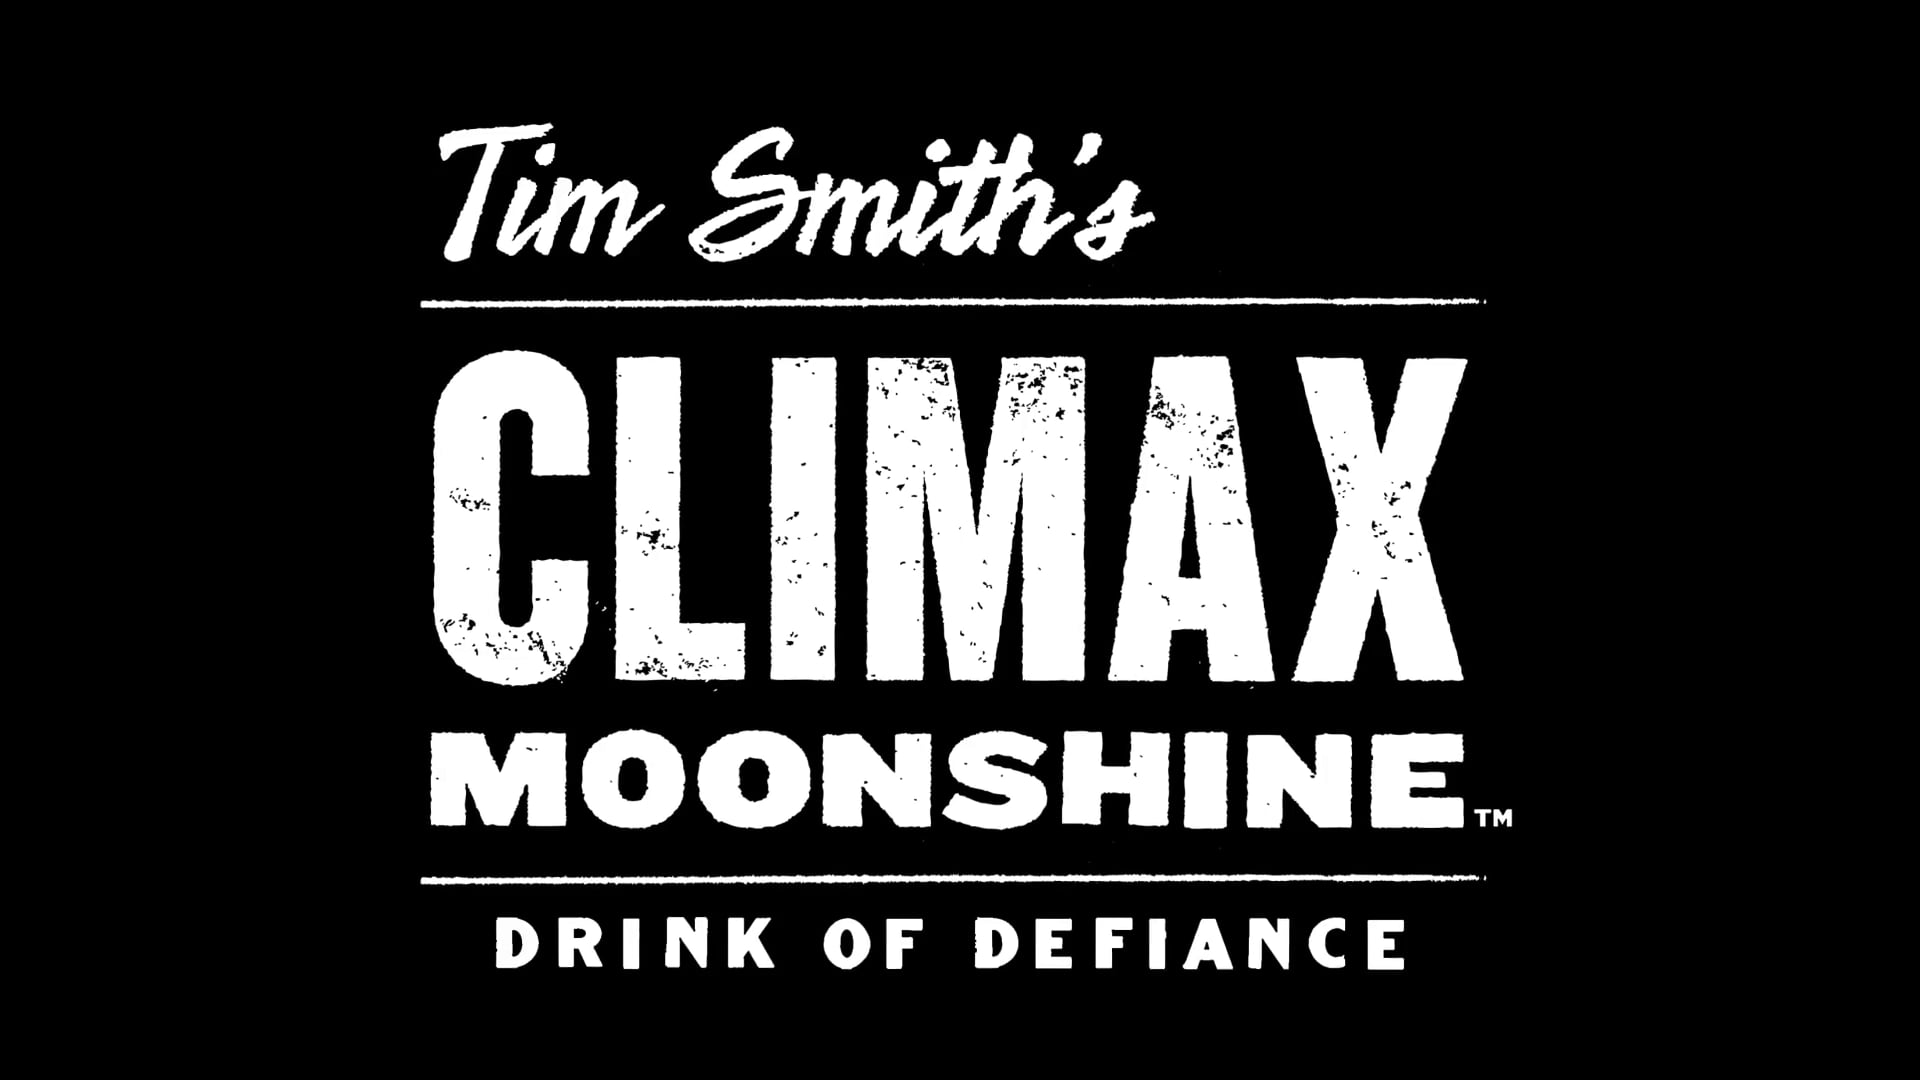 Climax Moonshine